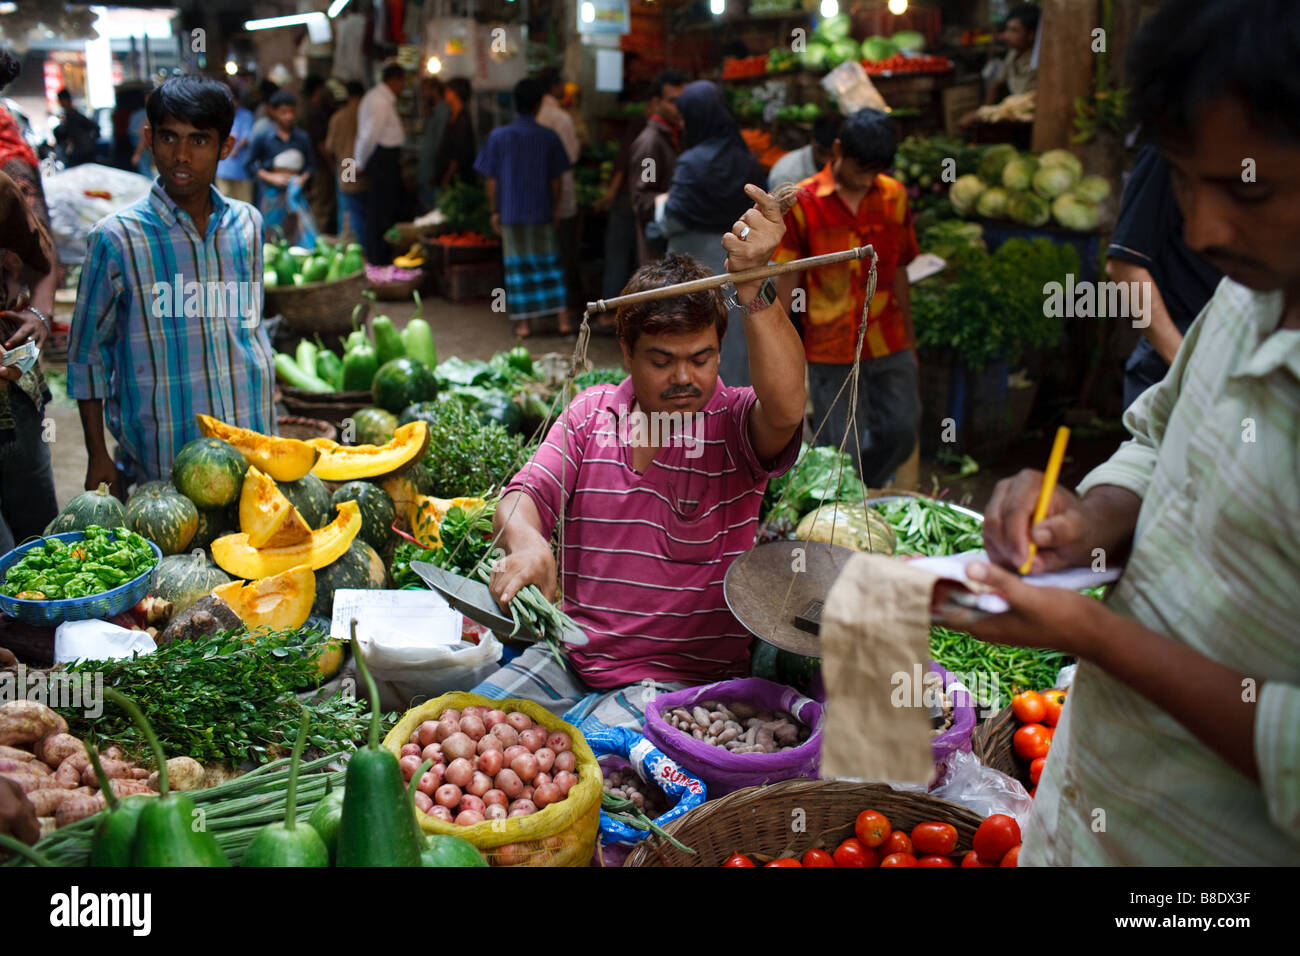 A fruit market in Gulshan district of Dhaka, Bangladesh Stock Photo